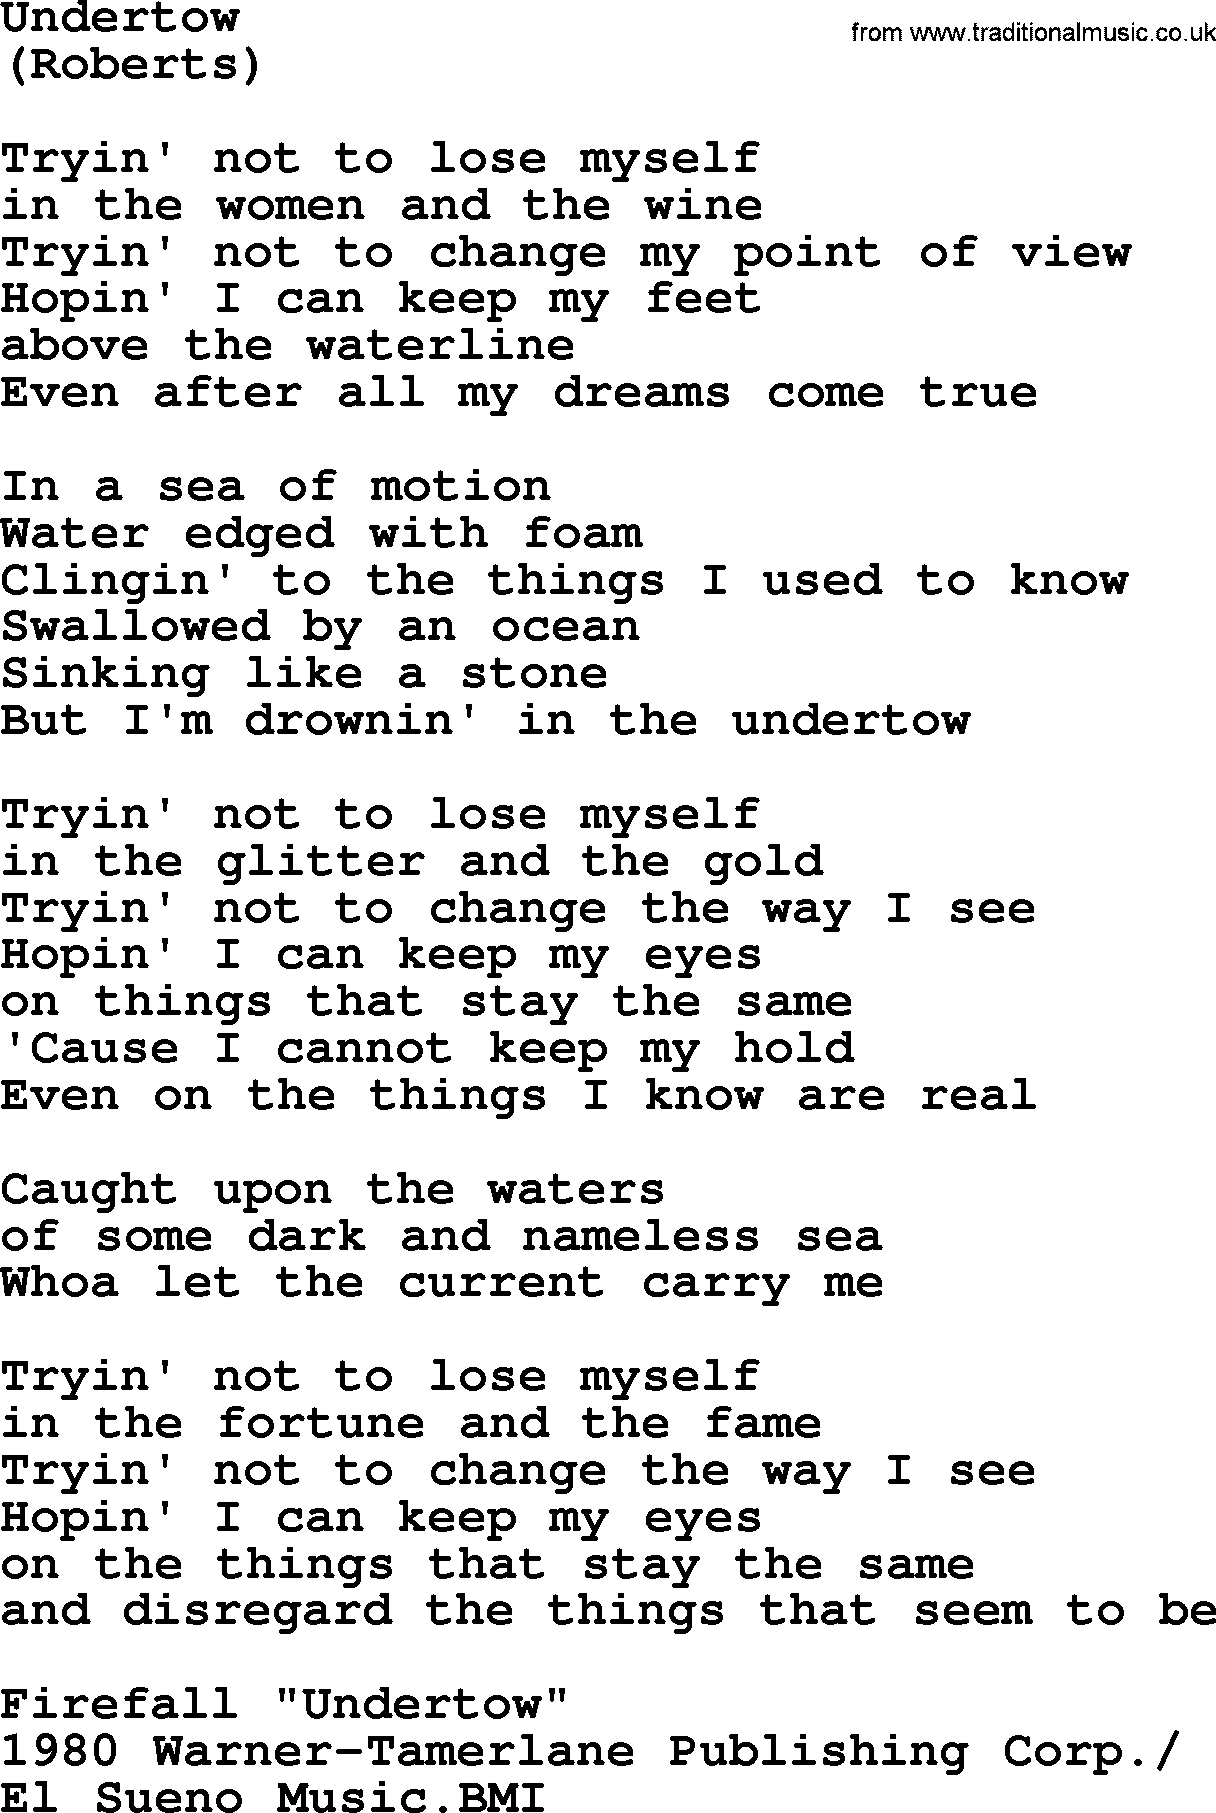 The Byrds song Undertow, lyrics